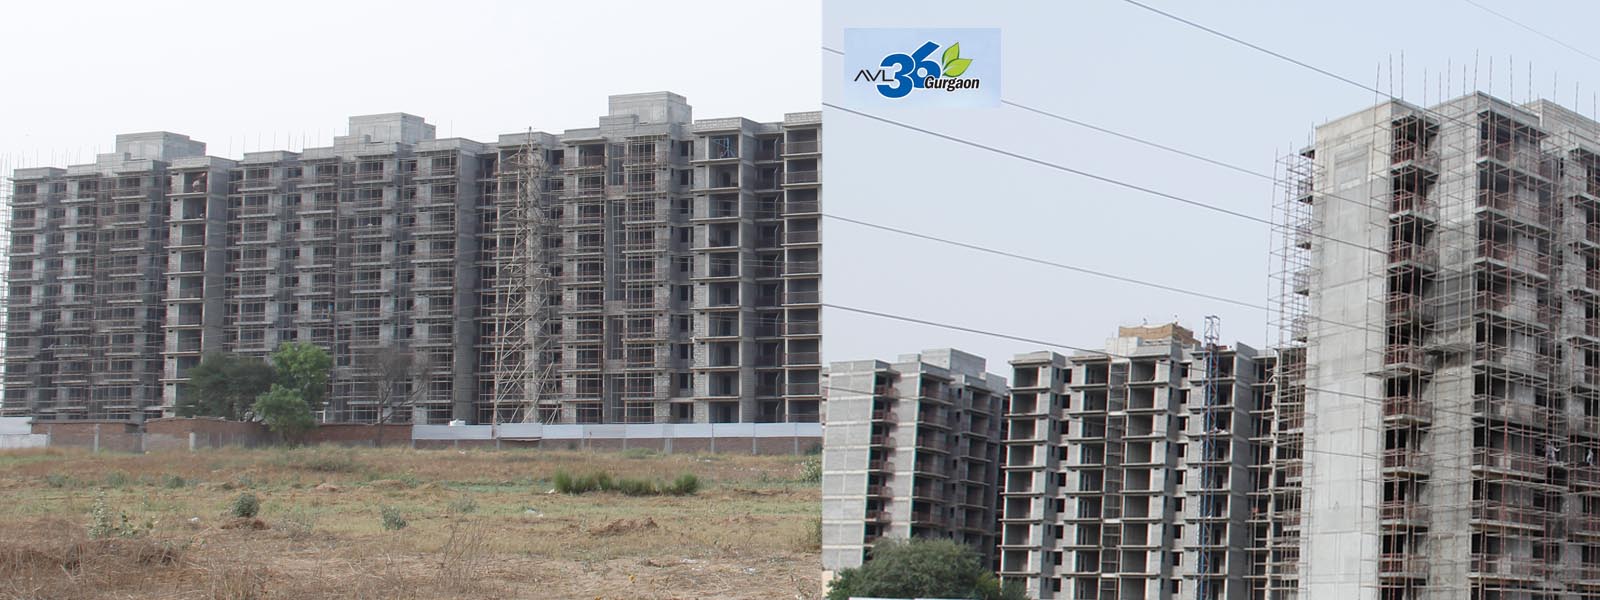 AVL Affordable housing in gurgaon